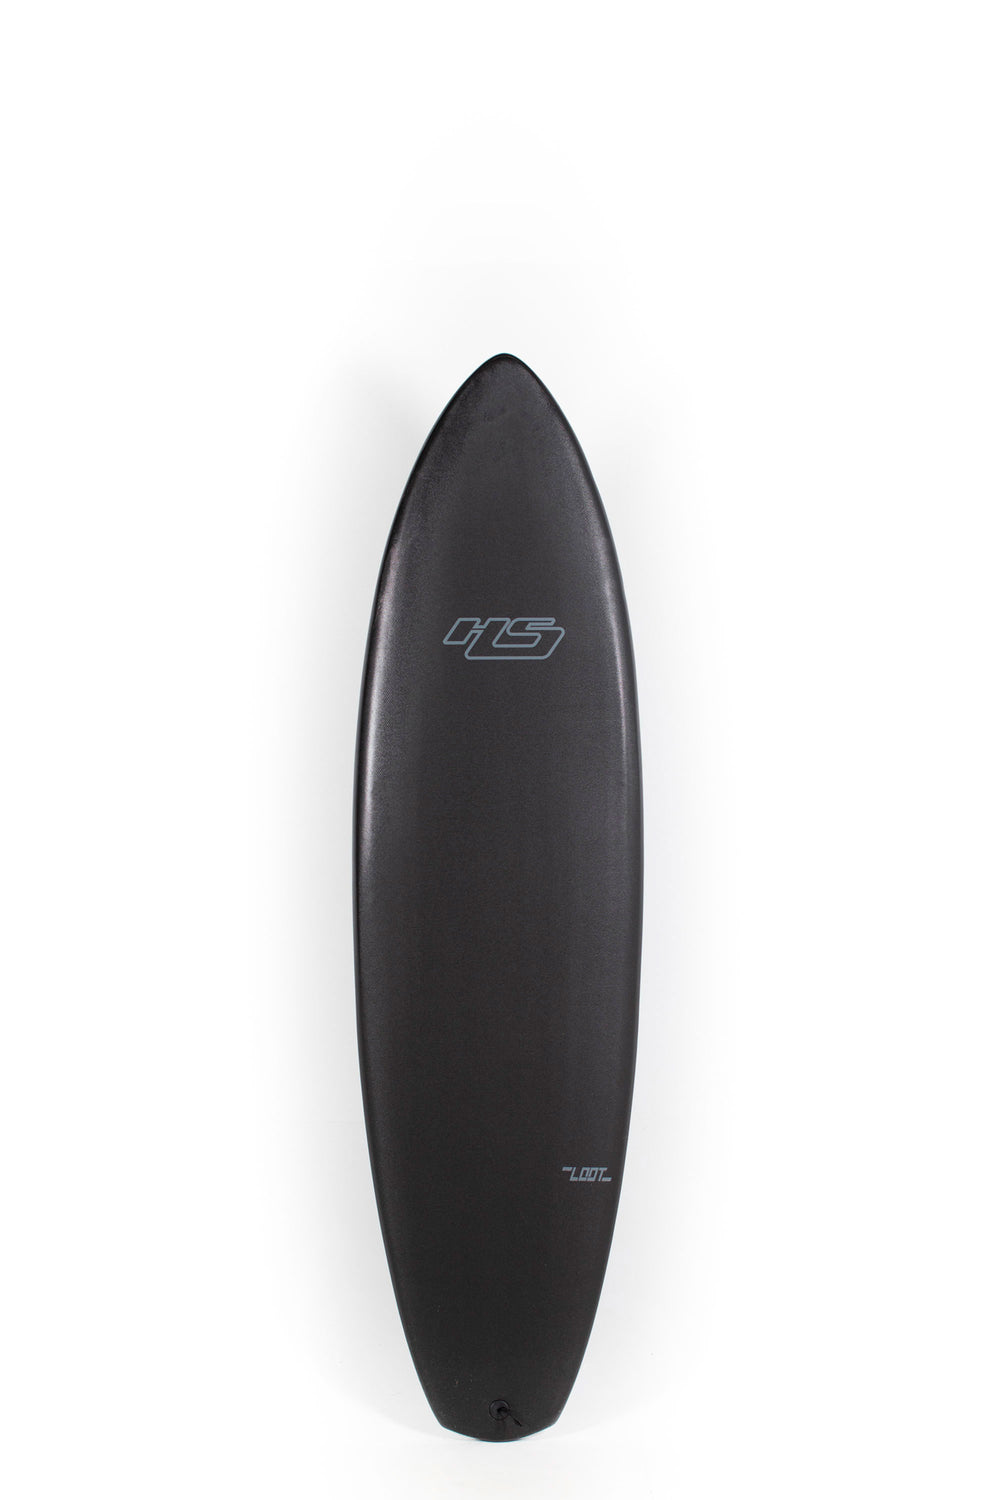 Pukas Surf Shop - HaydenShapes Surfboard - LOOT - 7'0